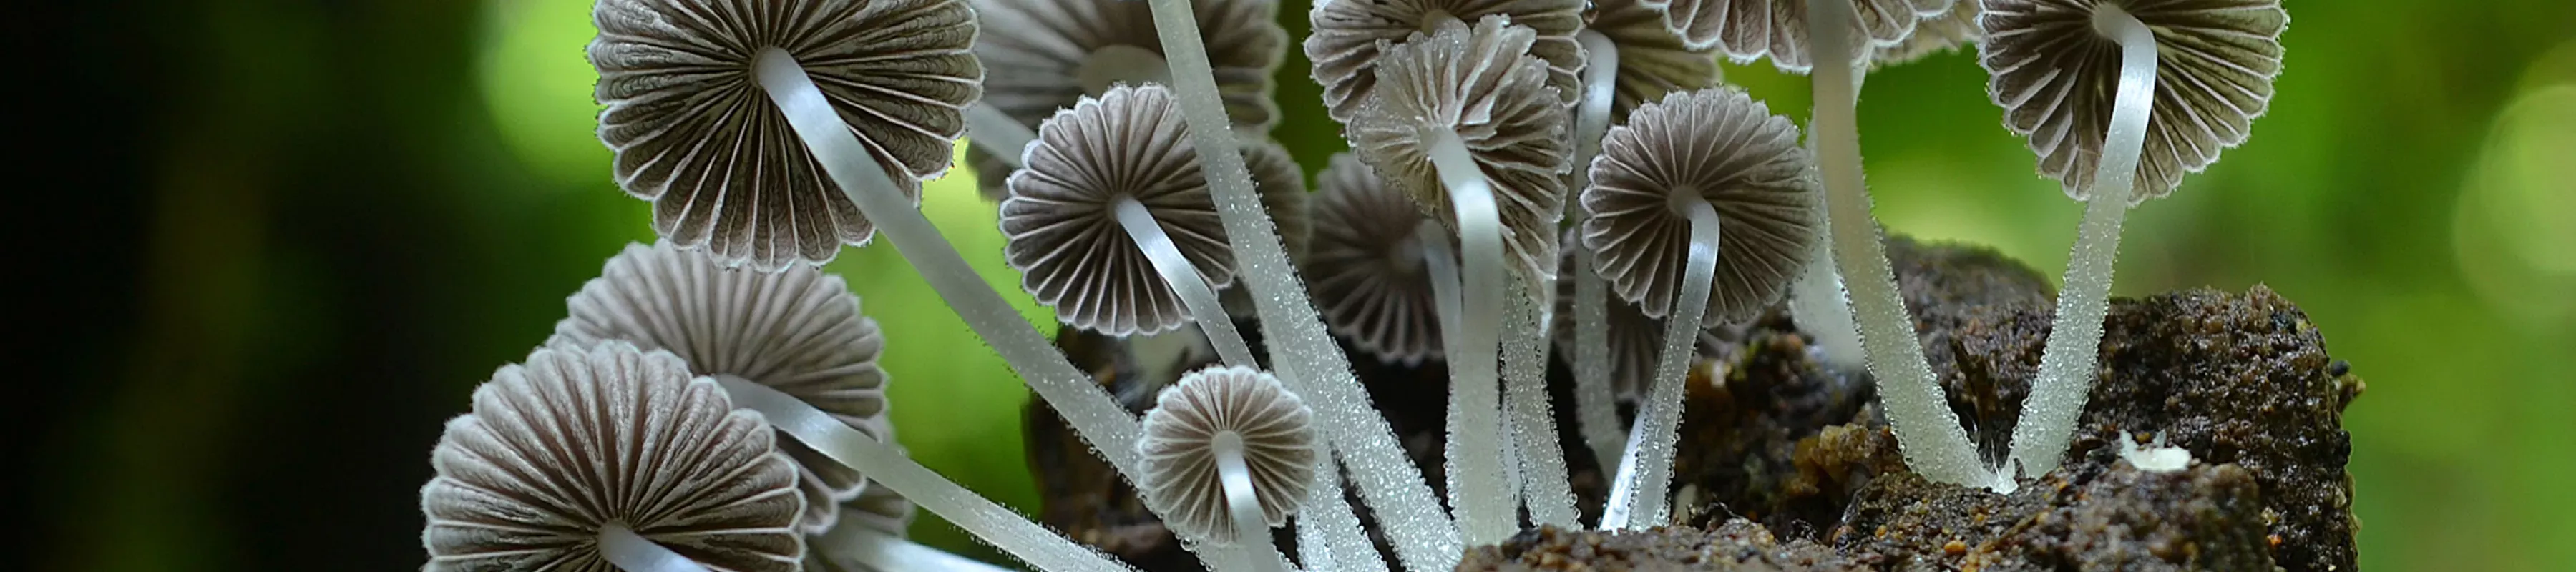 Small umbrella-like grey fungi Coprinellus disseminatus